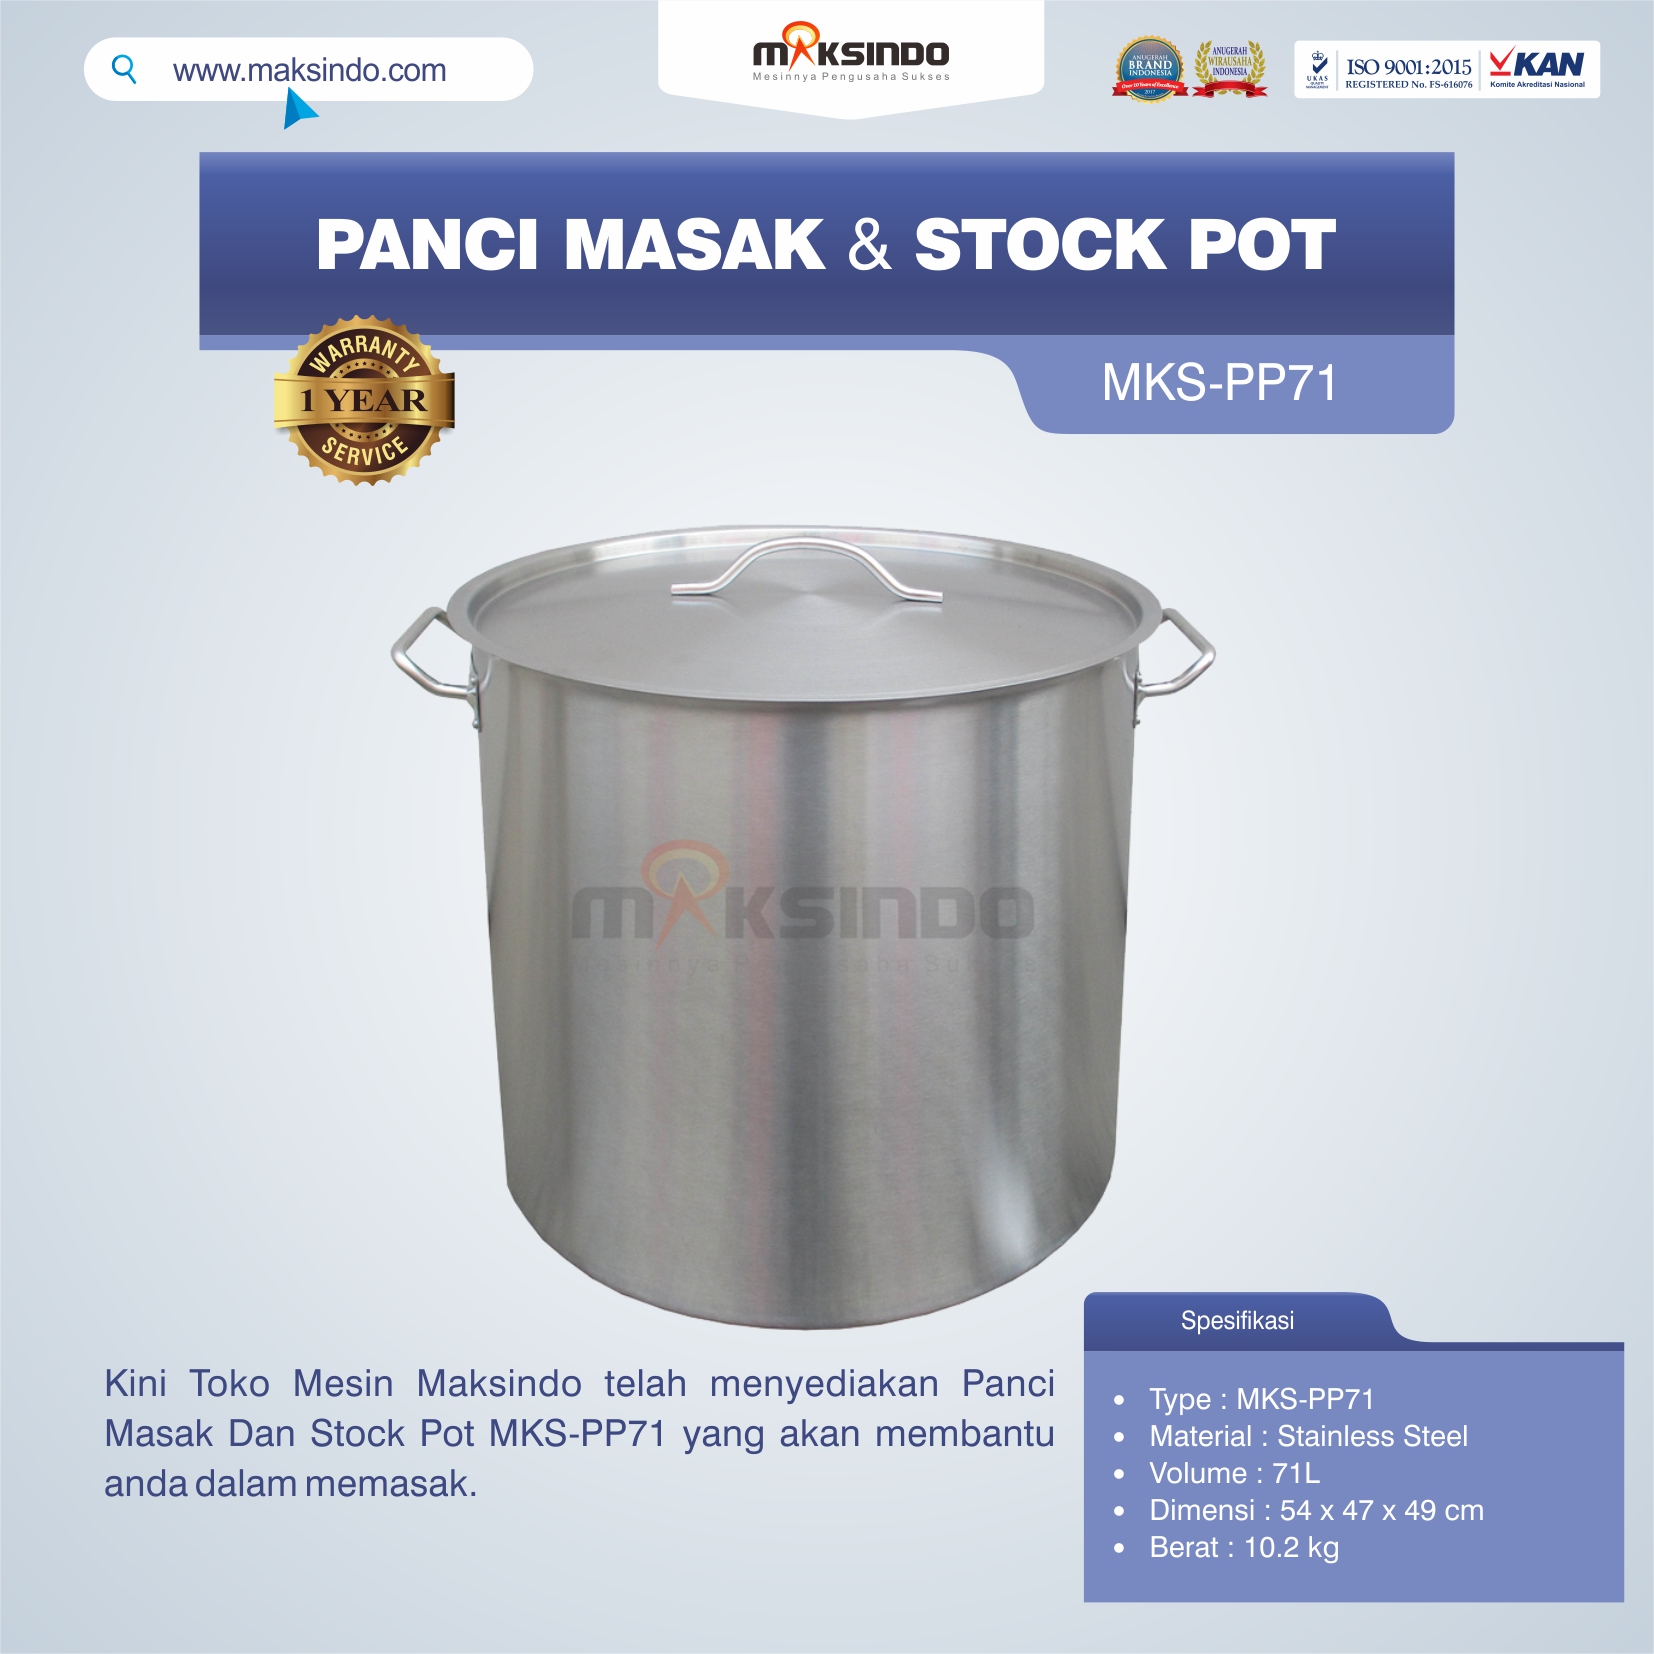 Jual Panci Masak Dan Stock Pot MKS-PP71 di Jakarta